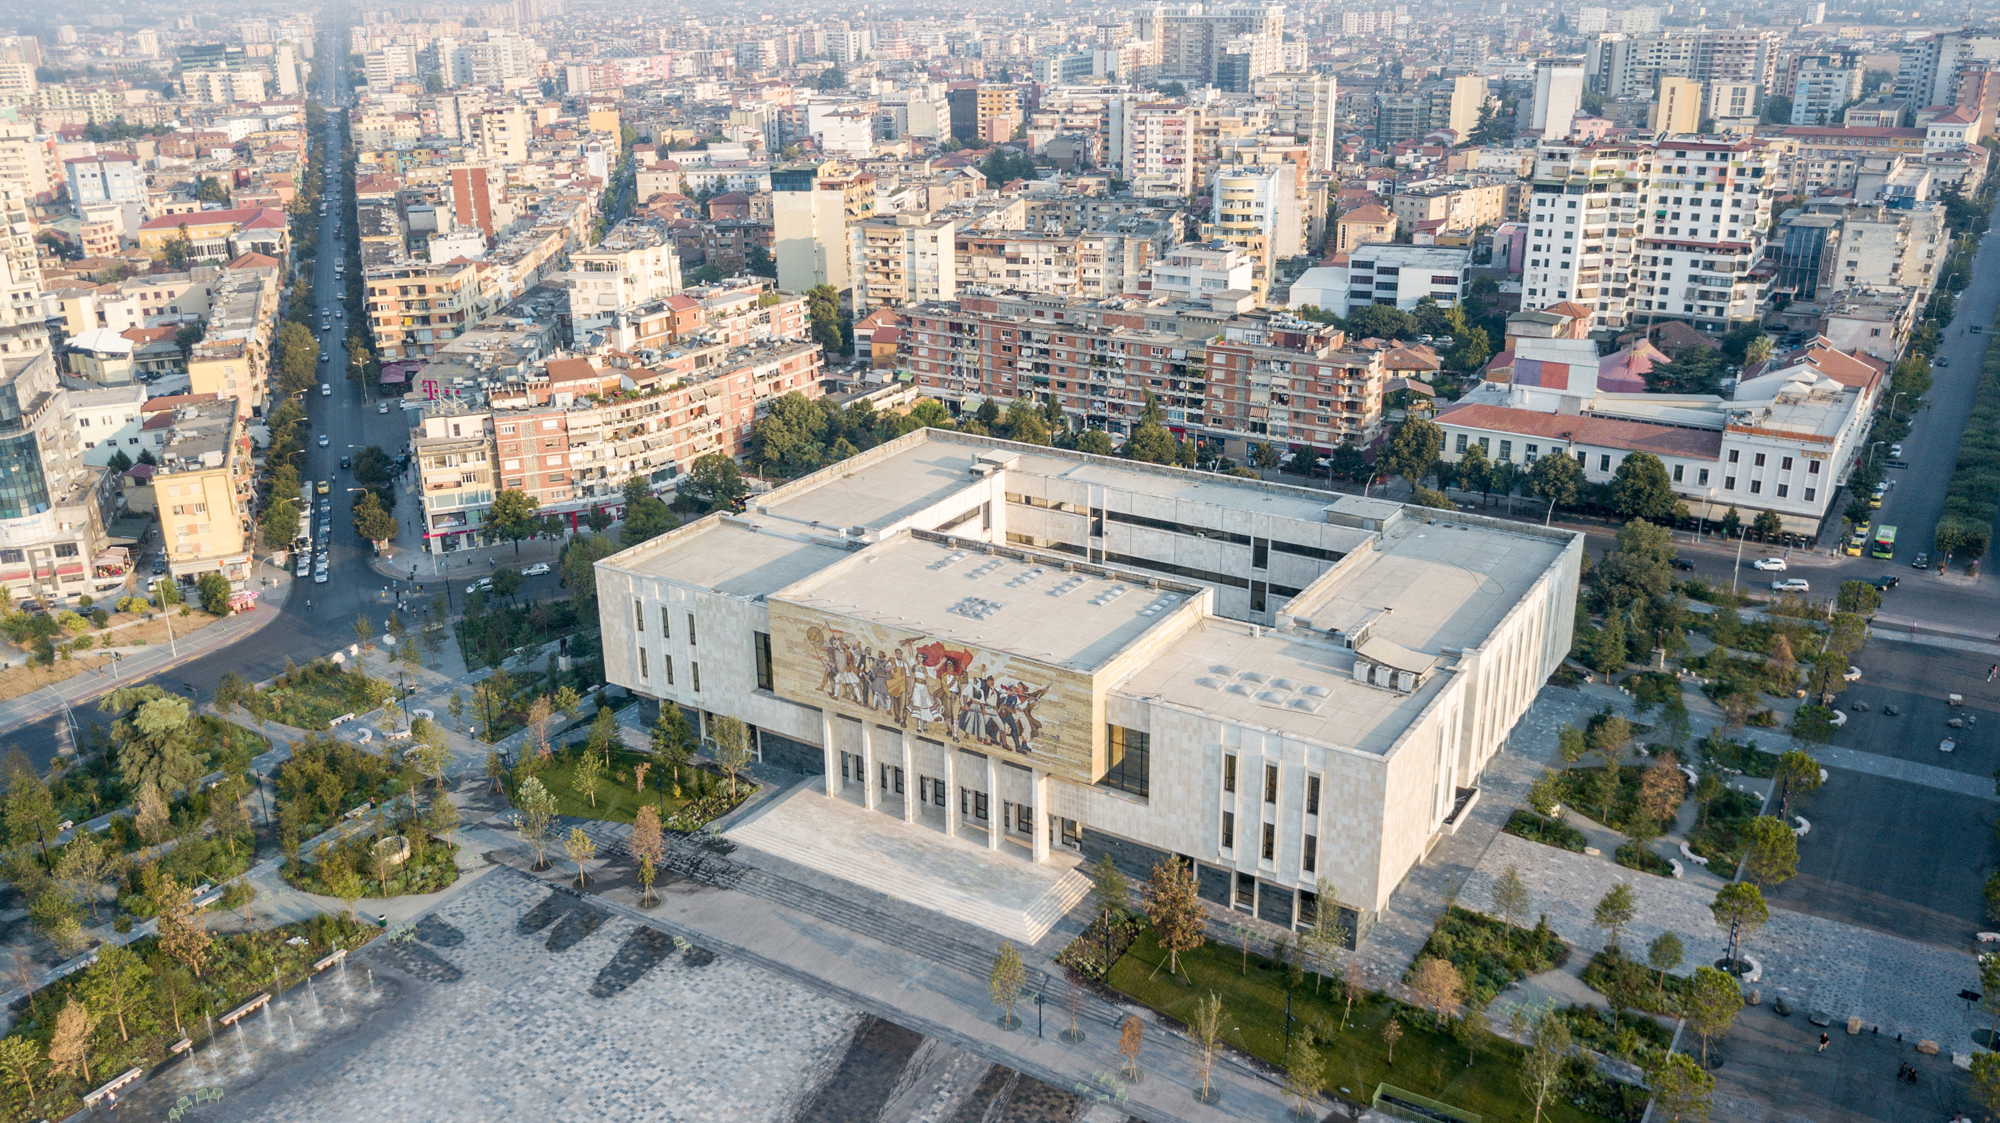 Aerial view of the main square in Tirana, Albania.